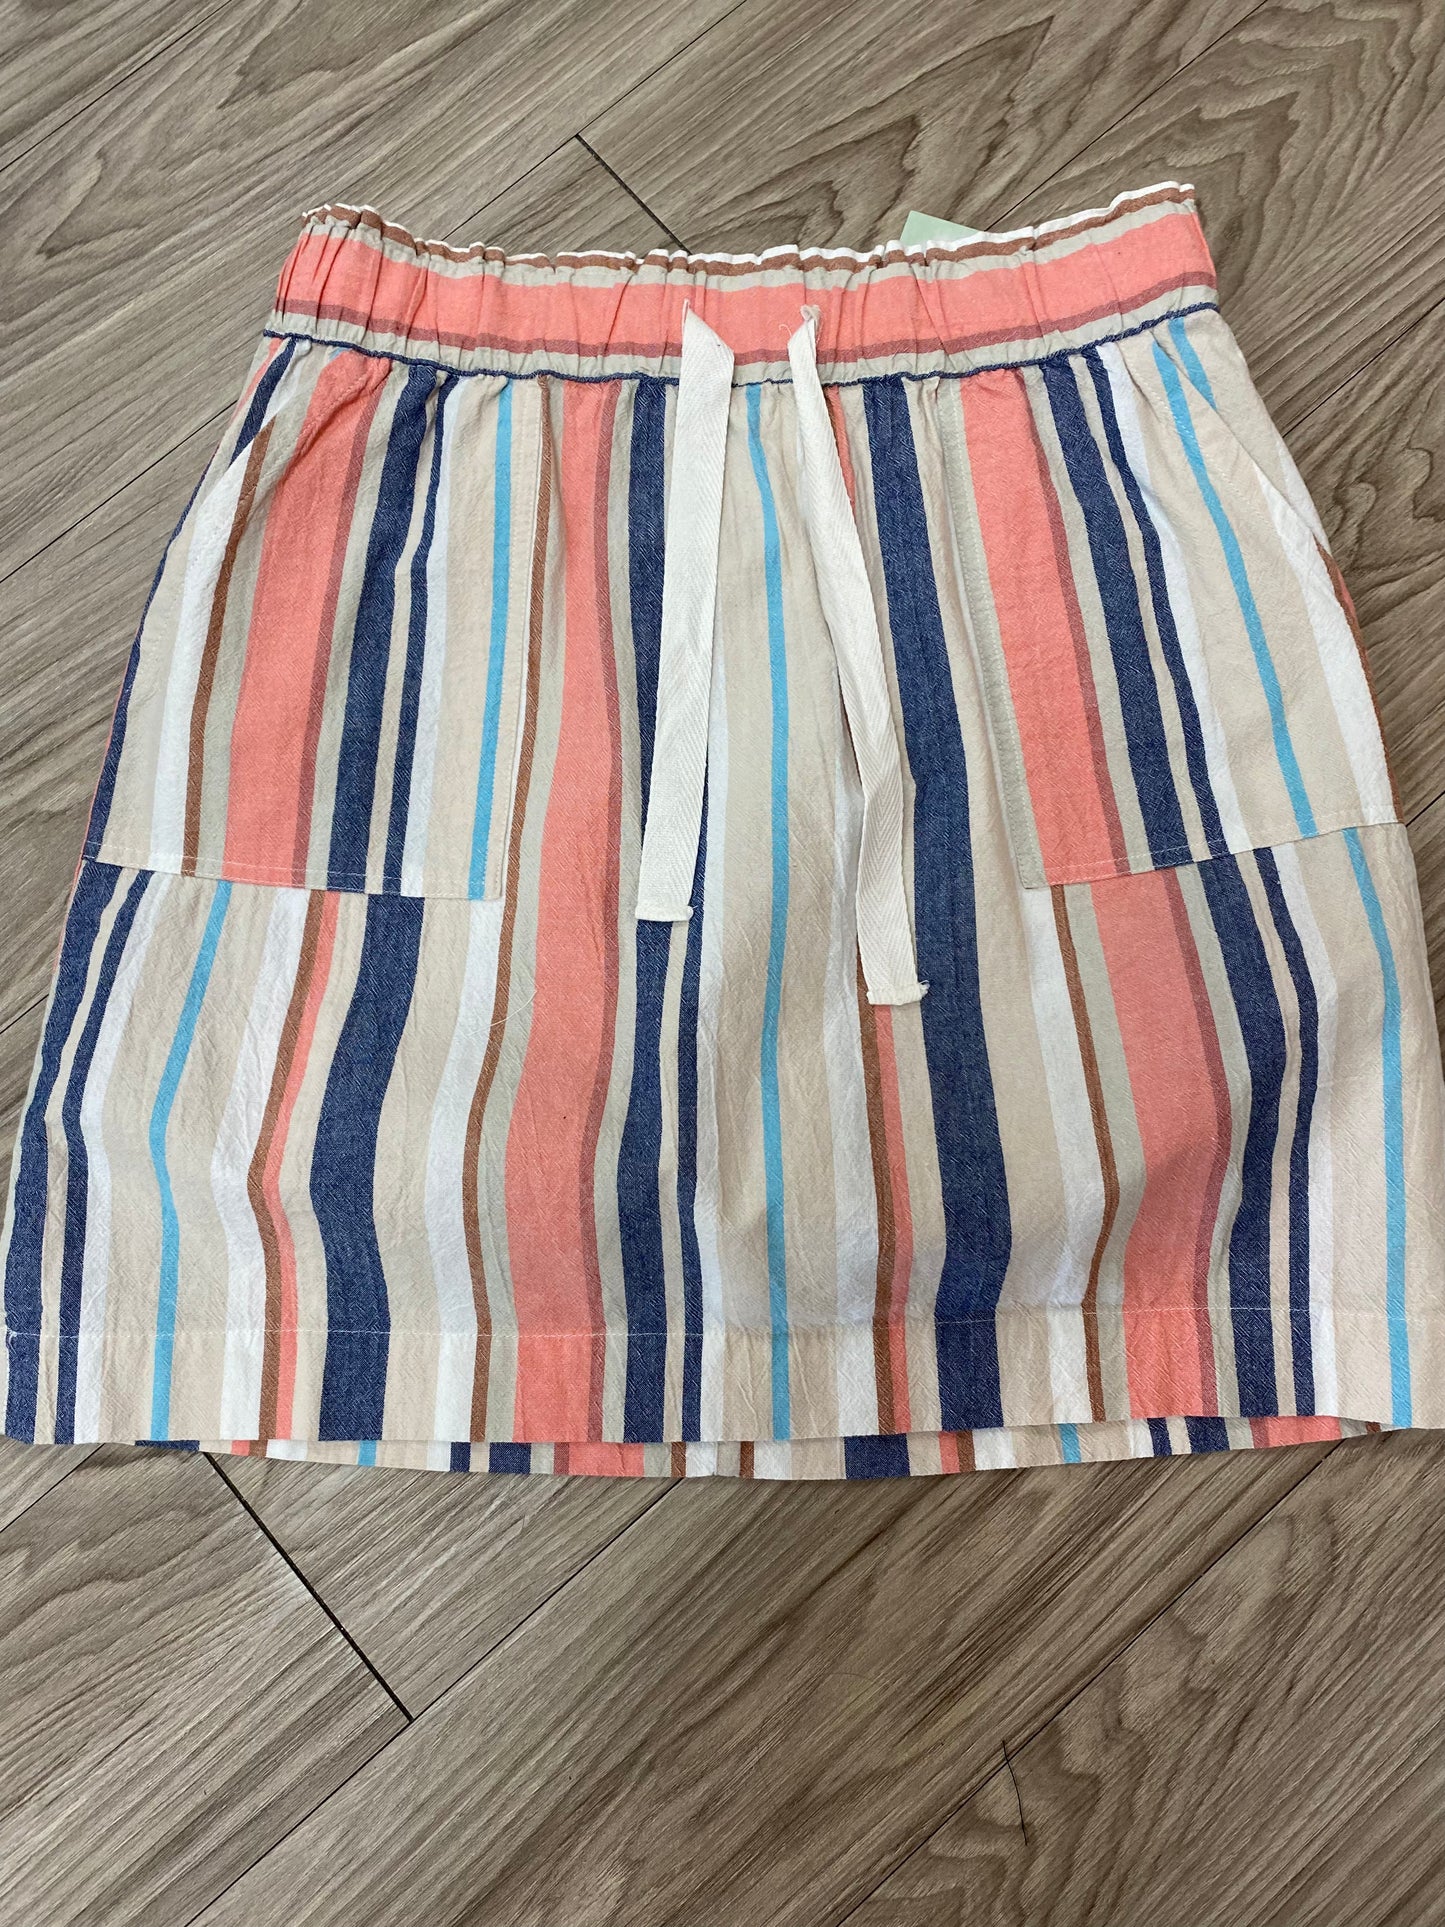 Keren Hart- Linen Stripe Skirt